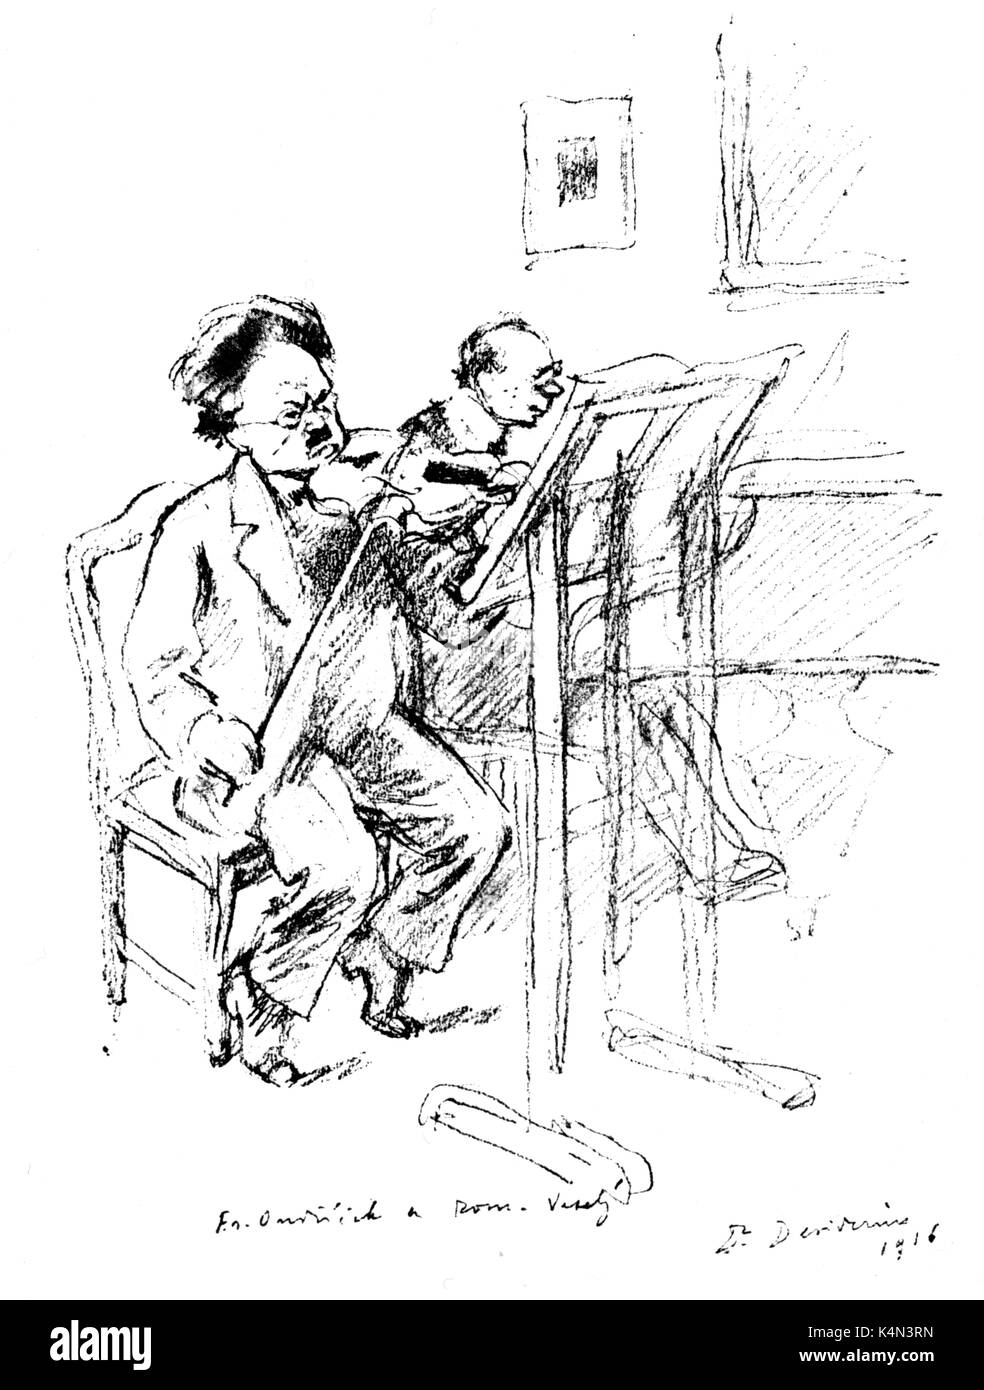 Franz Ondricek - à jouer du violon avec R Vesely jouer du piano, 1916. Ondricek : violoniste tchèque, 1857-1922. Fils de Jan Ondricek Banque D'Images